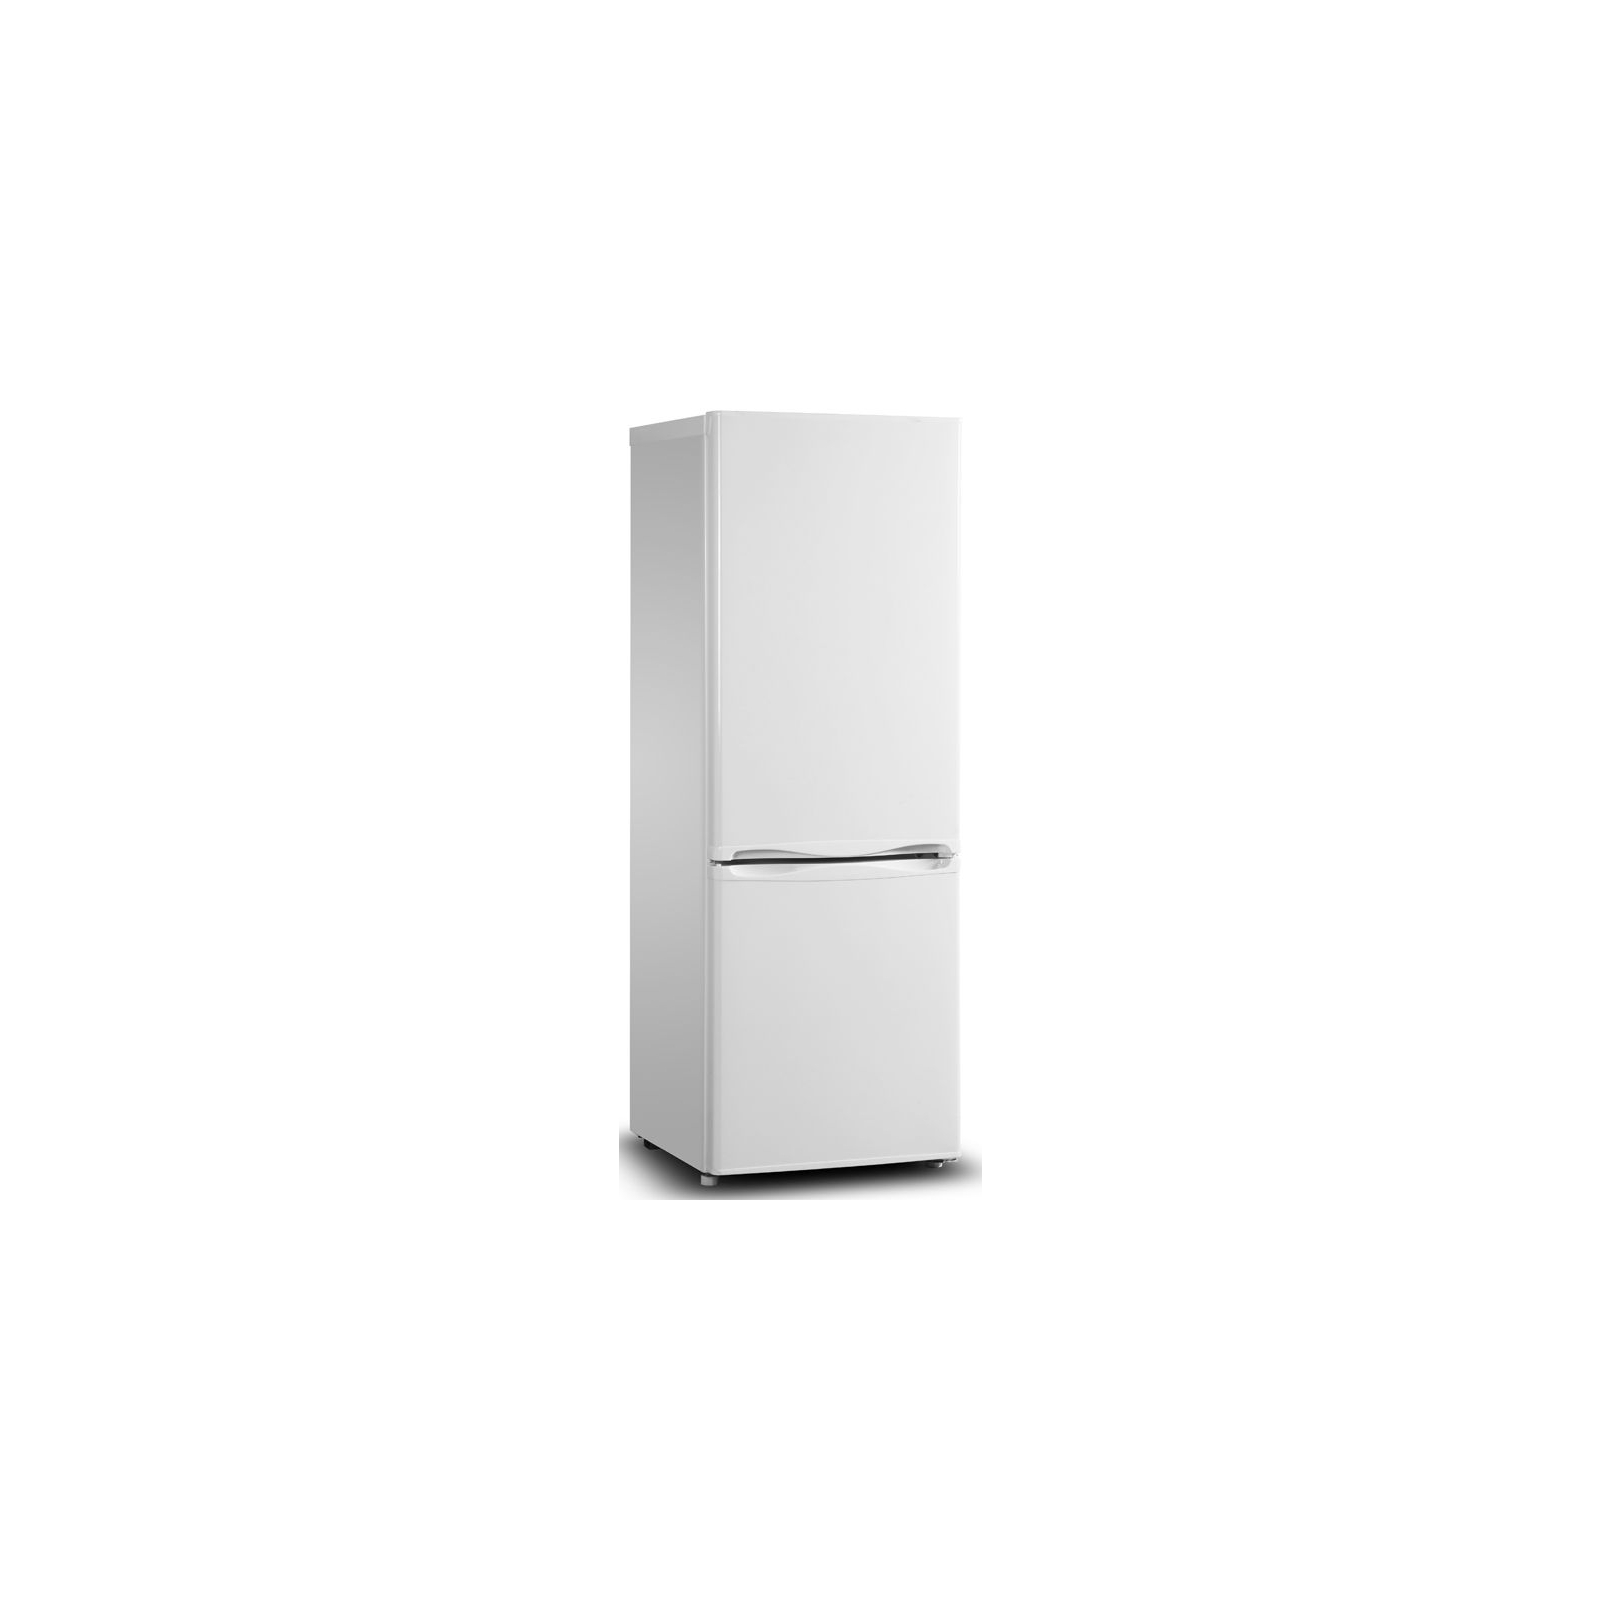 Холодильник Delfa DBF-170W